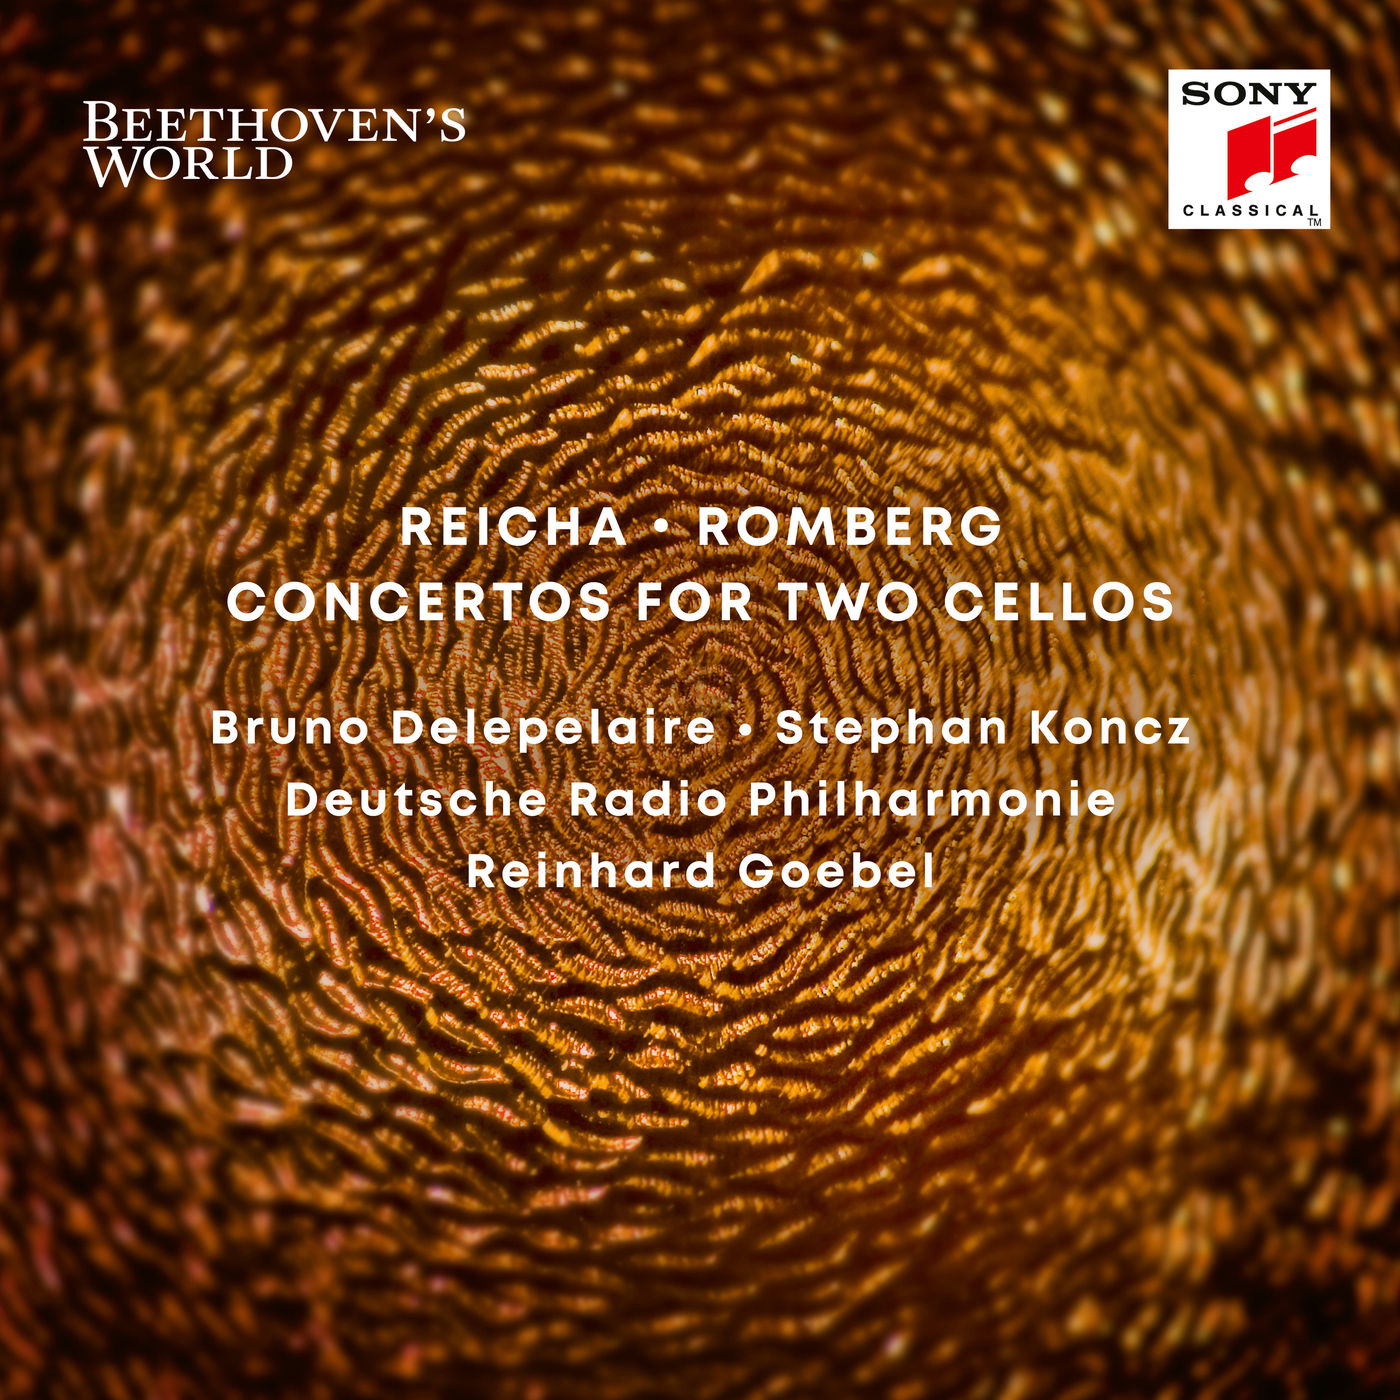 Reicha, Romberg - Concertos for Two Cellos - Goebel